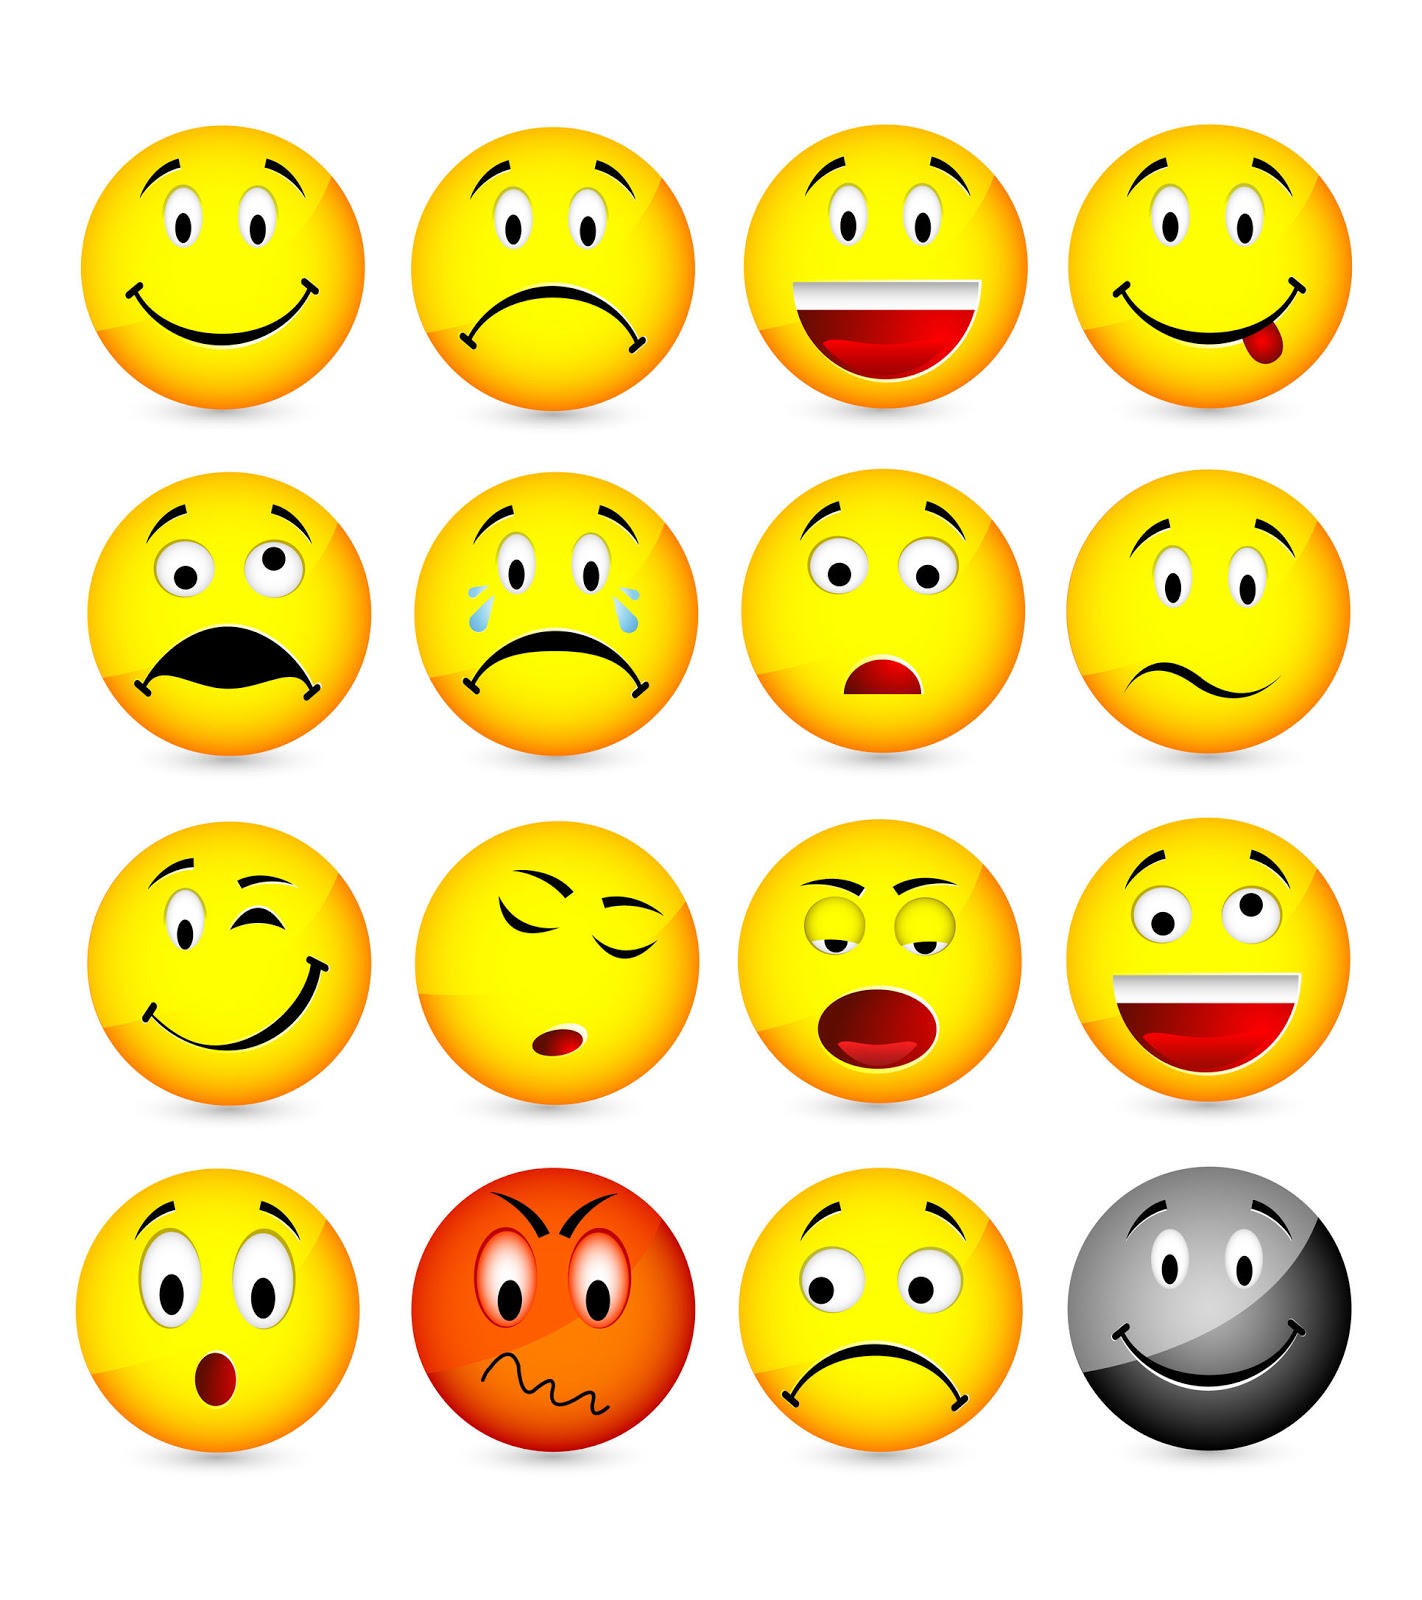 Kode emoji facebook 2013